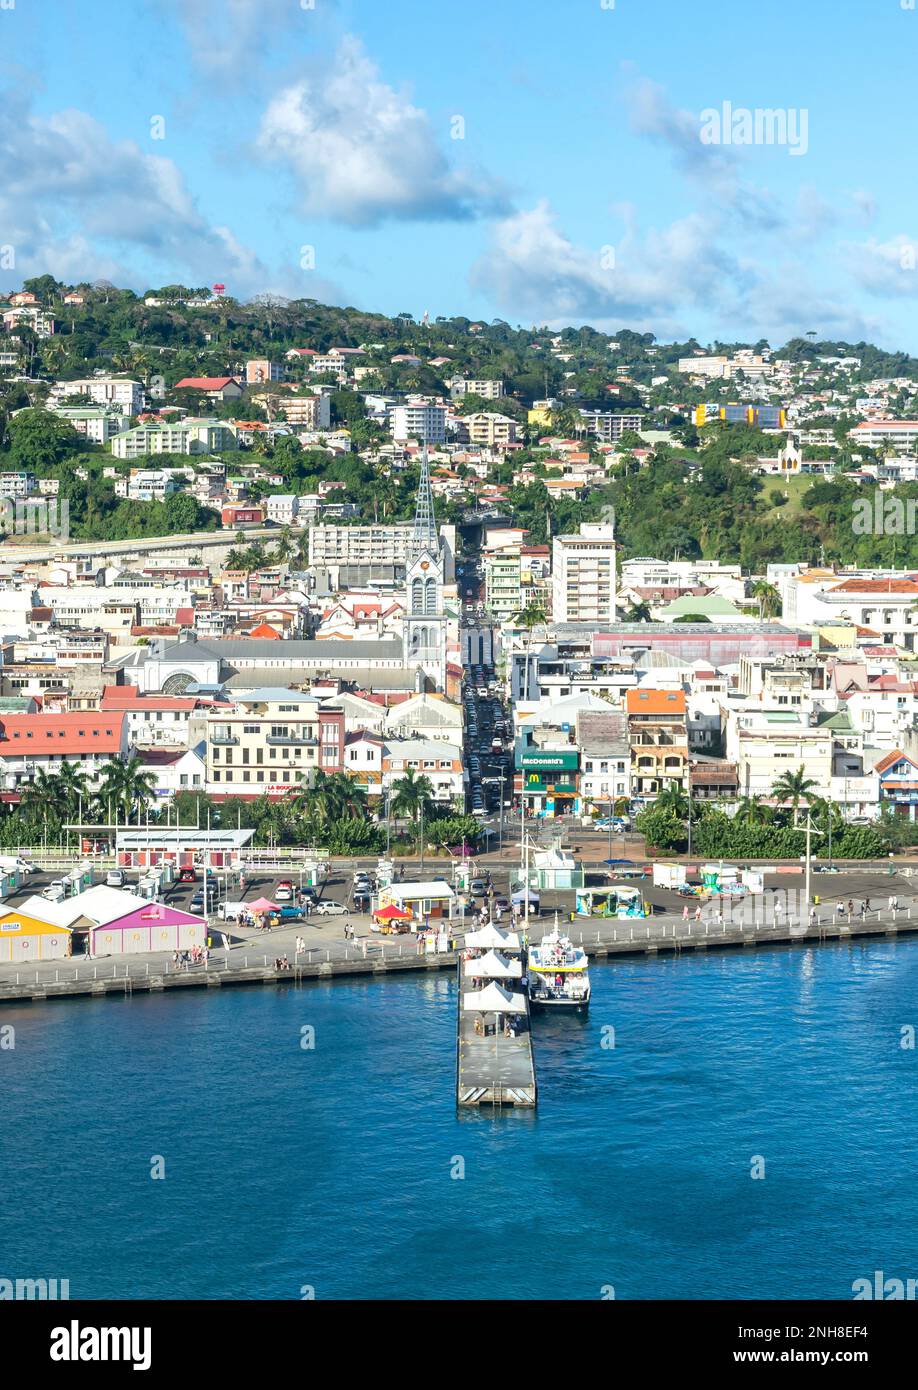 Aerial view of city centre, Fort-de-France, Martinique, Lesser Antilles, Caribbean Stock Photo